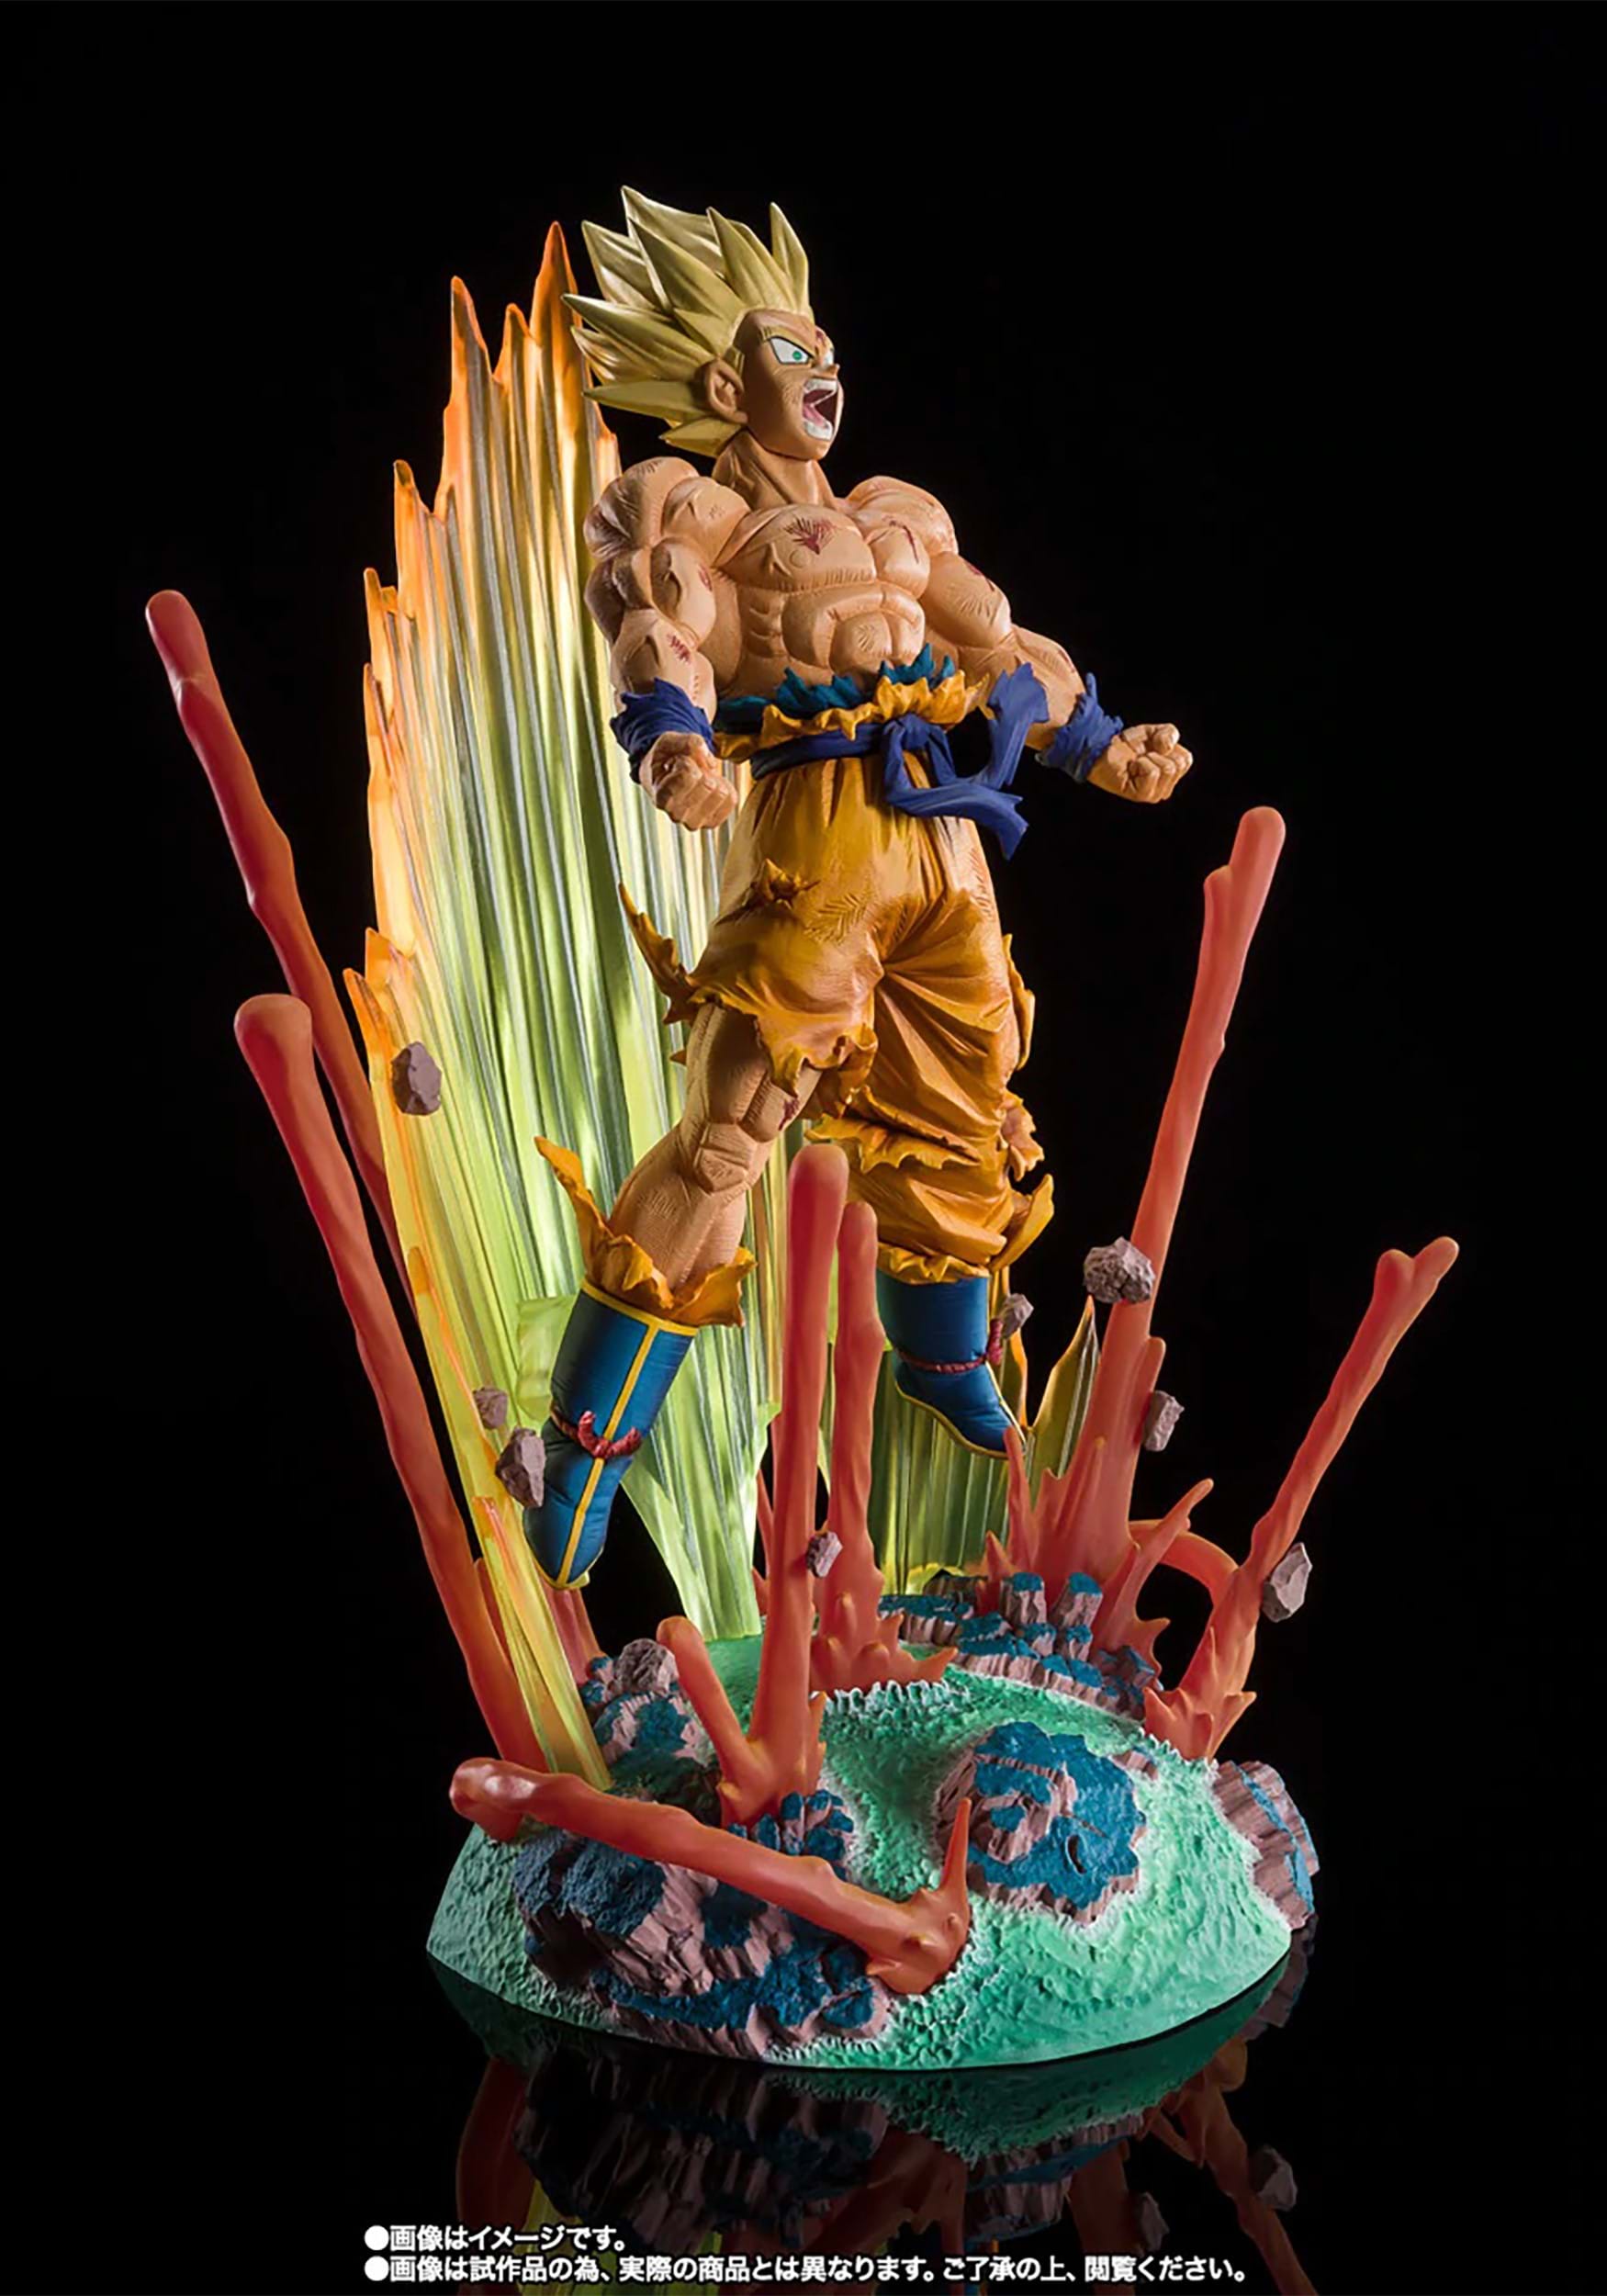 Are You Talking About Krillin Super Saiyan Goku Statue